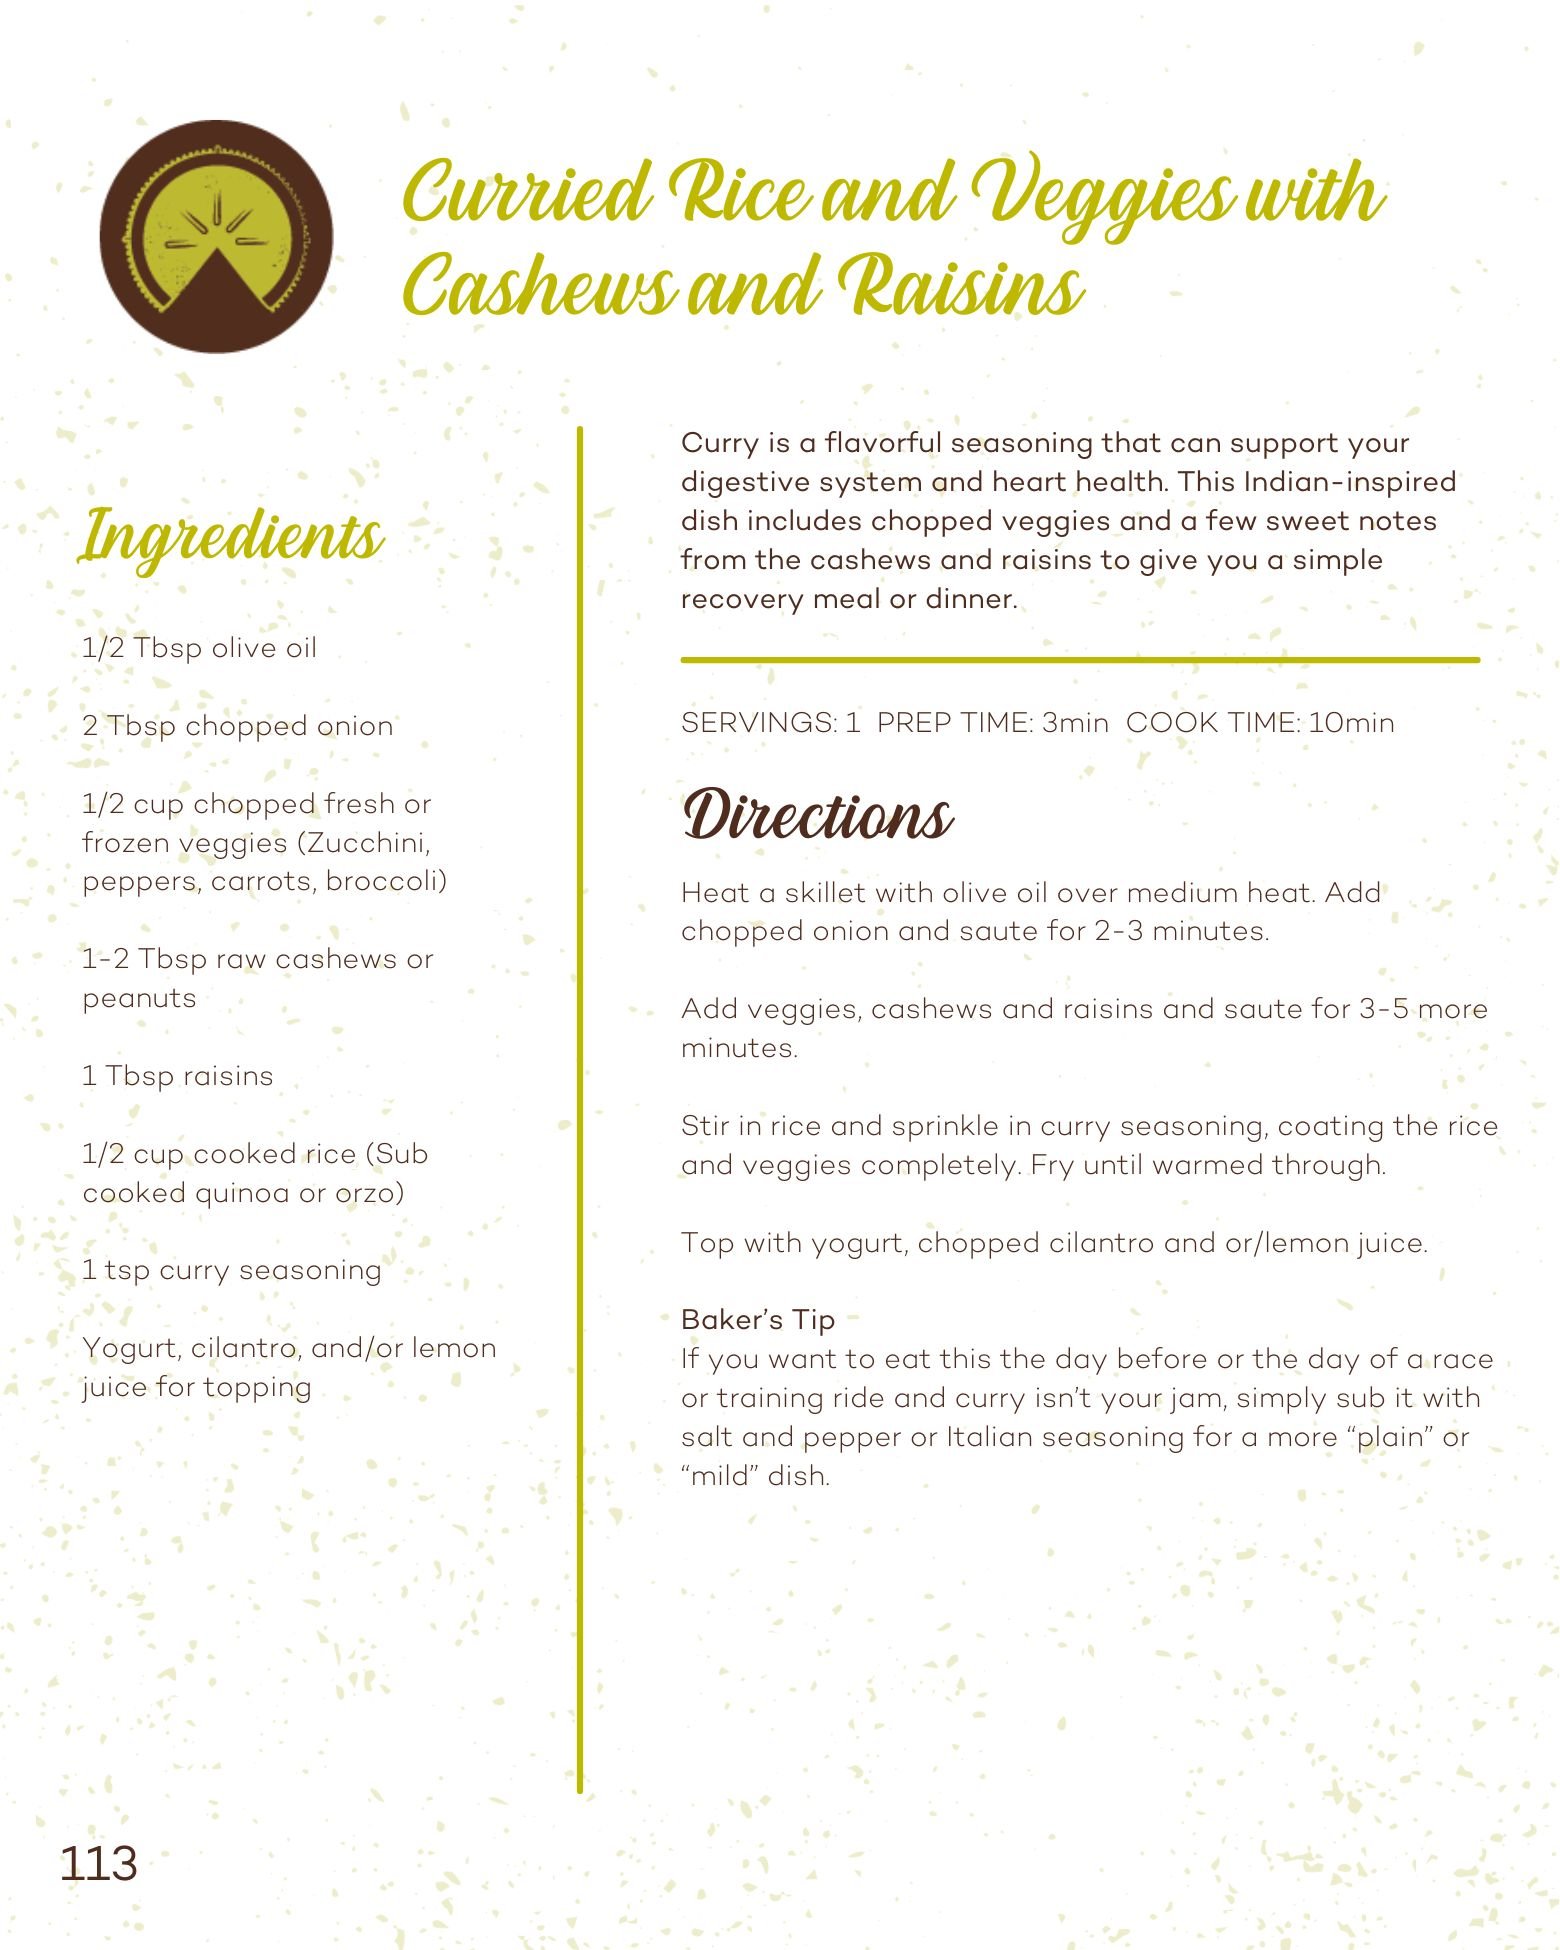 Curried Rice and Veggies Recipe